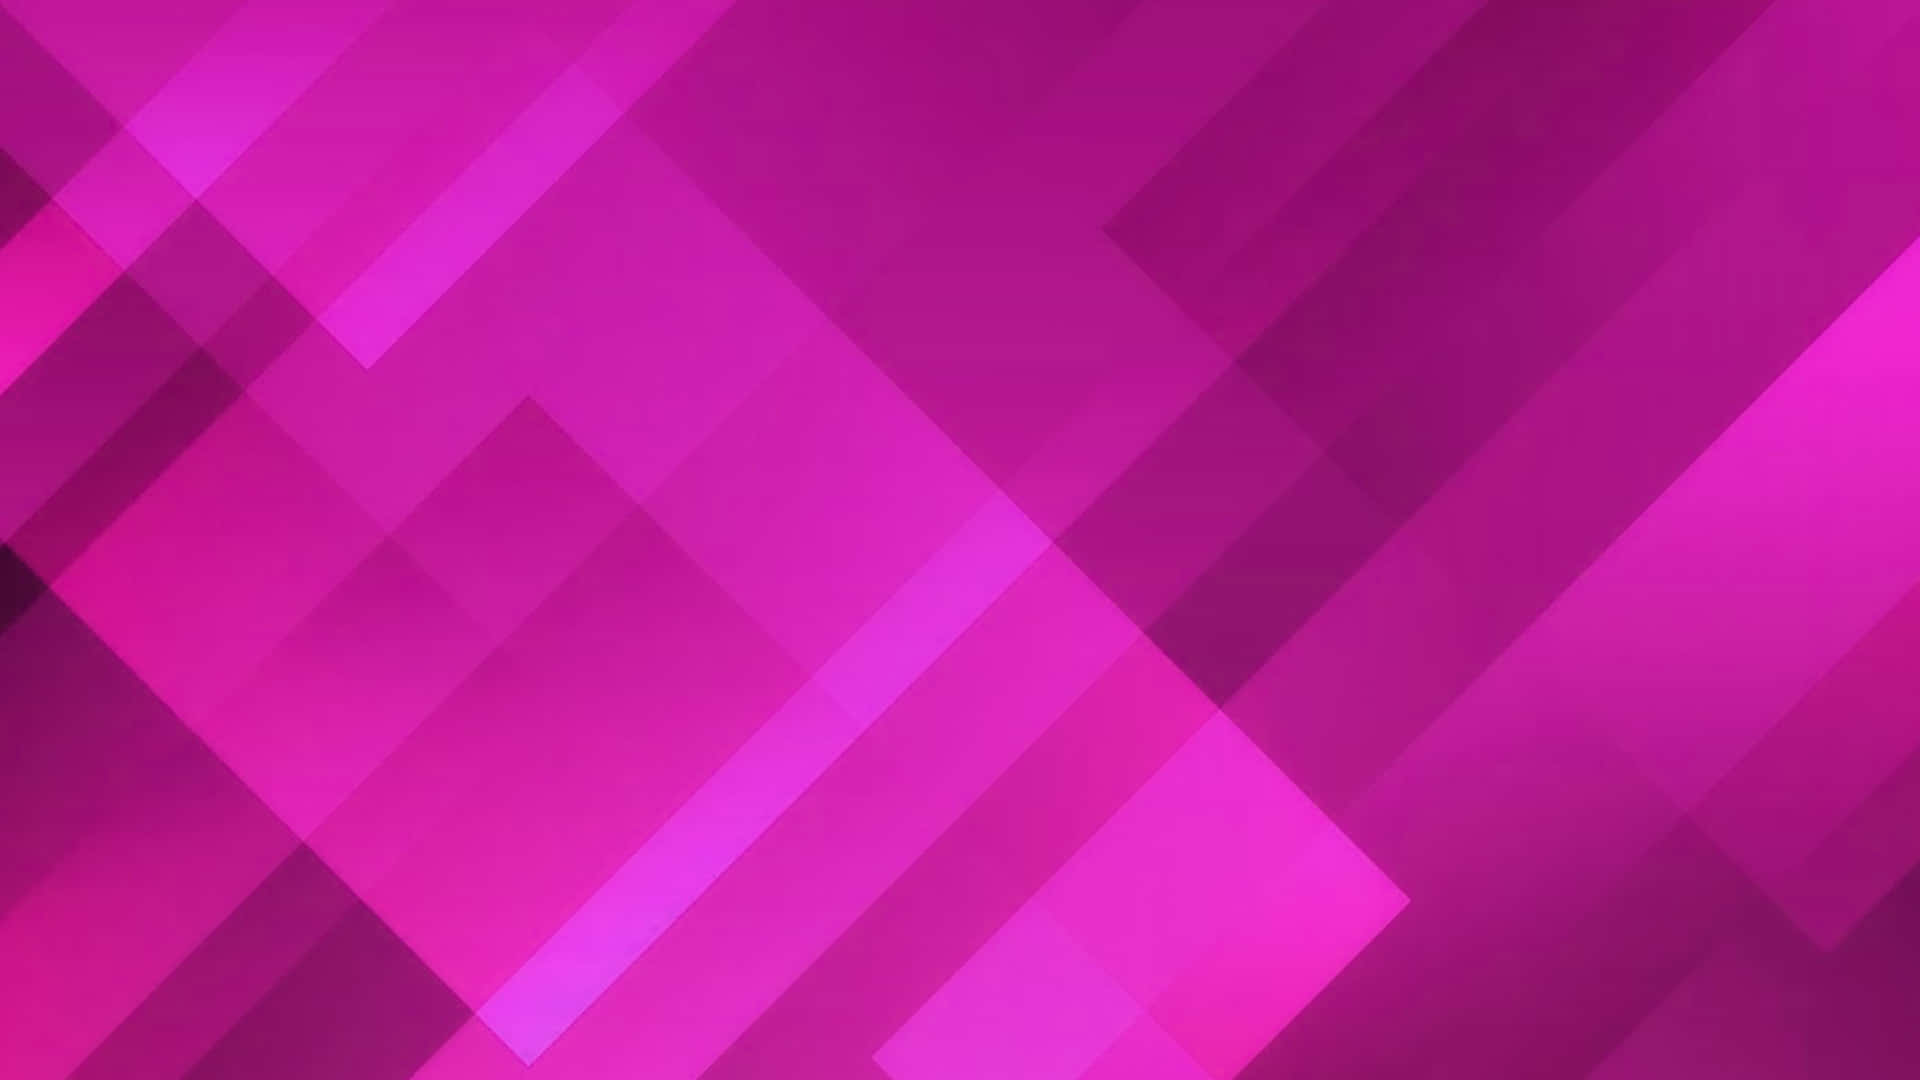 Pink Gradient Background - A Mesmerizing Display Of Vivid Hues